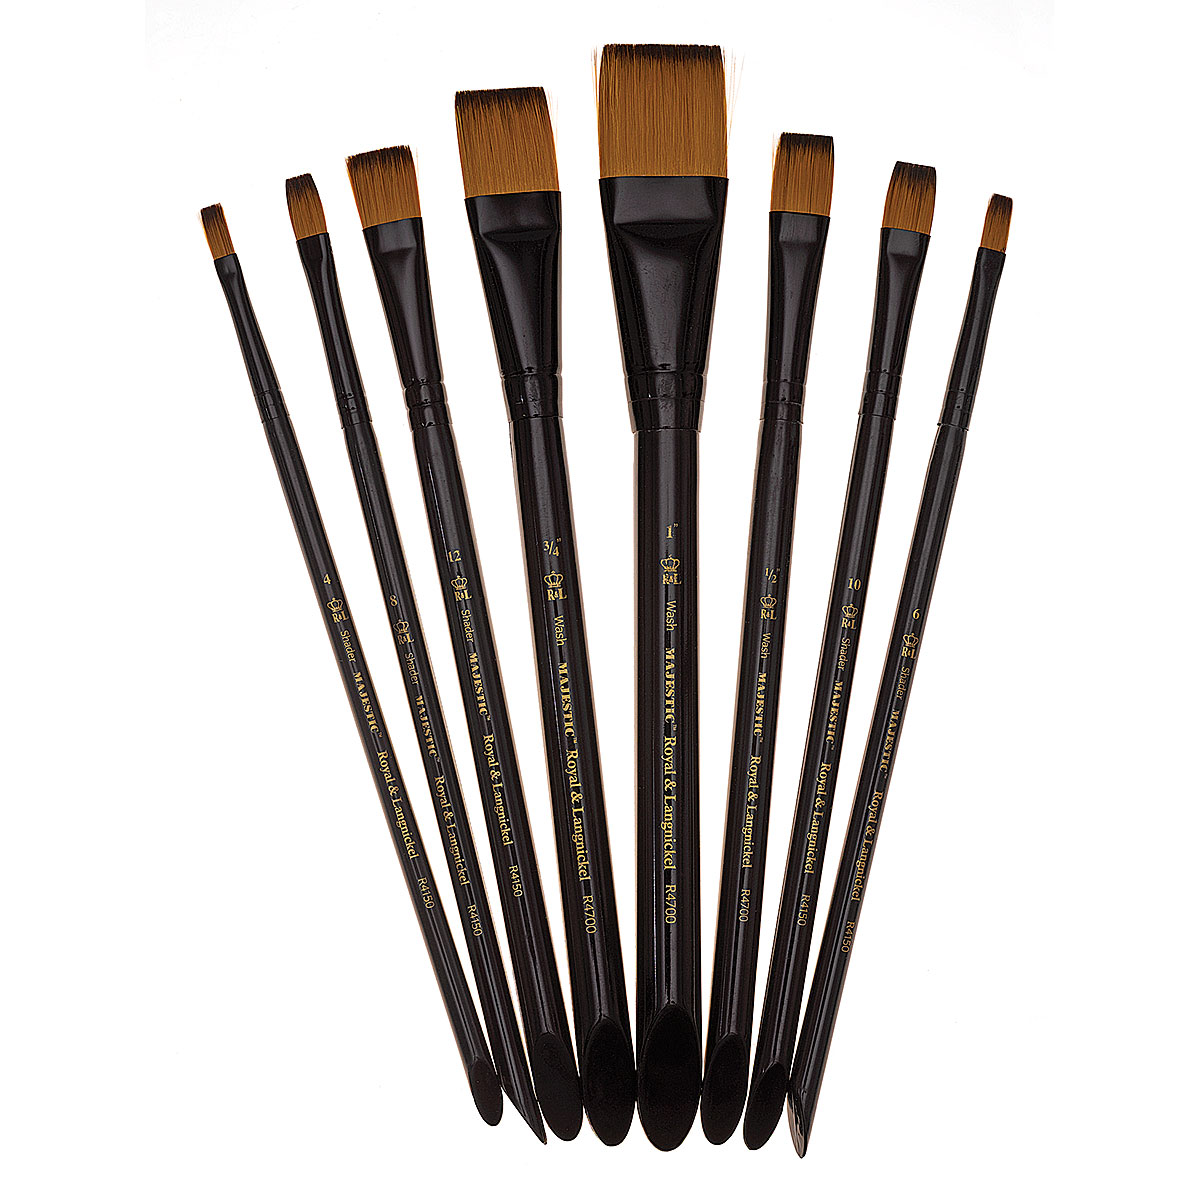 Royal & Langnickel Short Handle Acrylic Paint Brushes